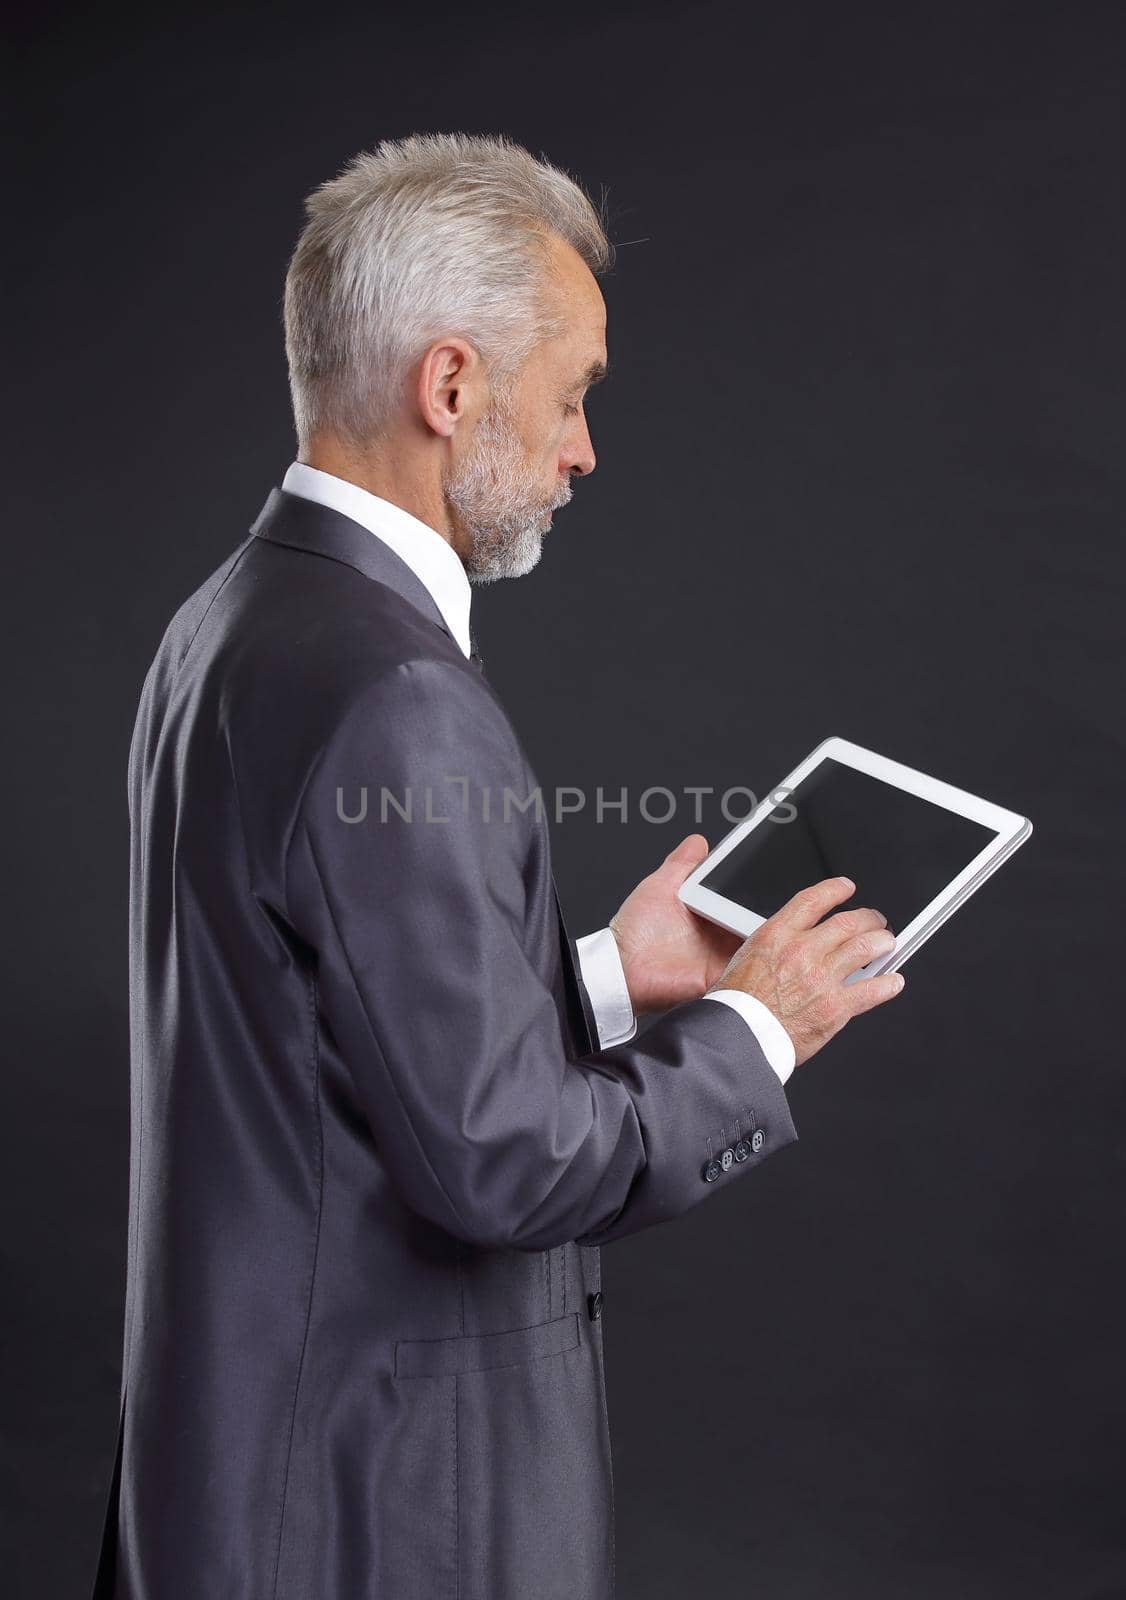 serious businessman looking at digital tablet screen.